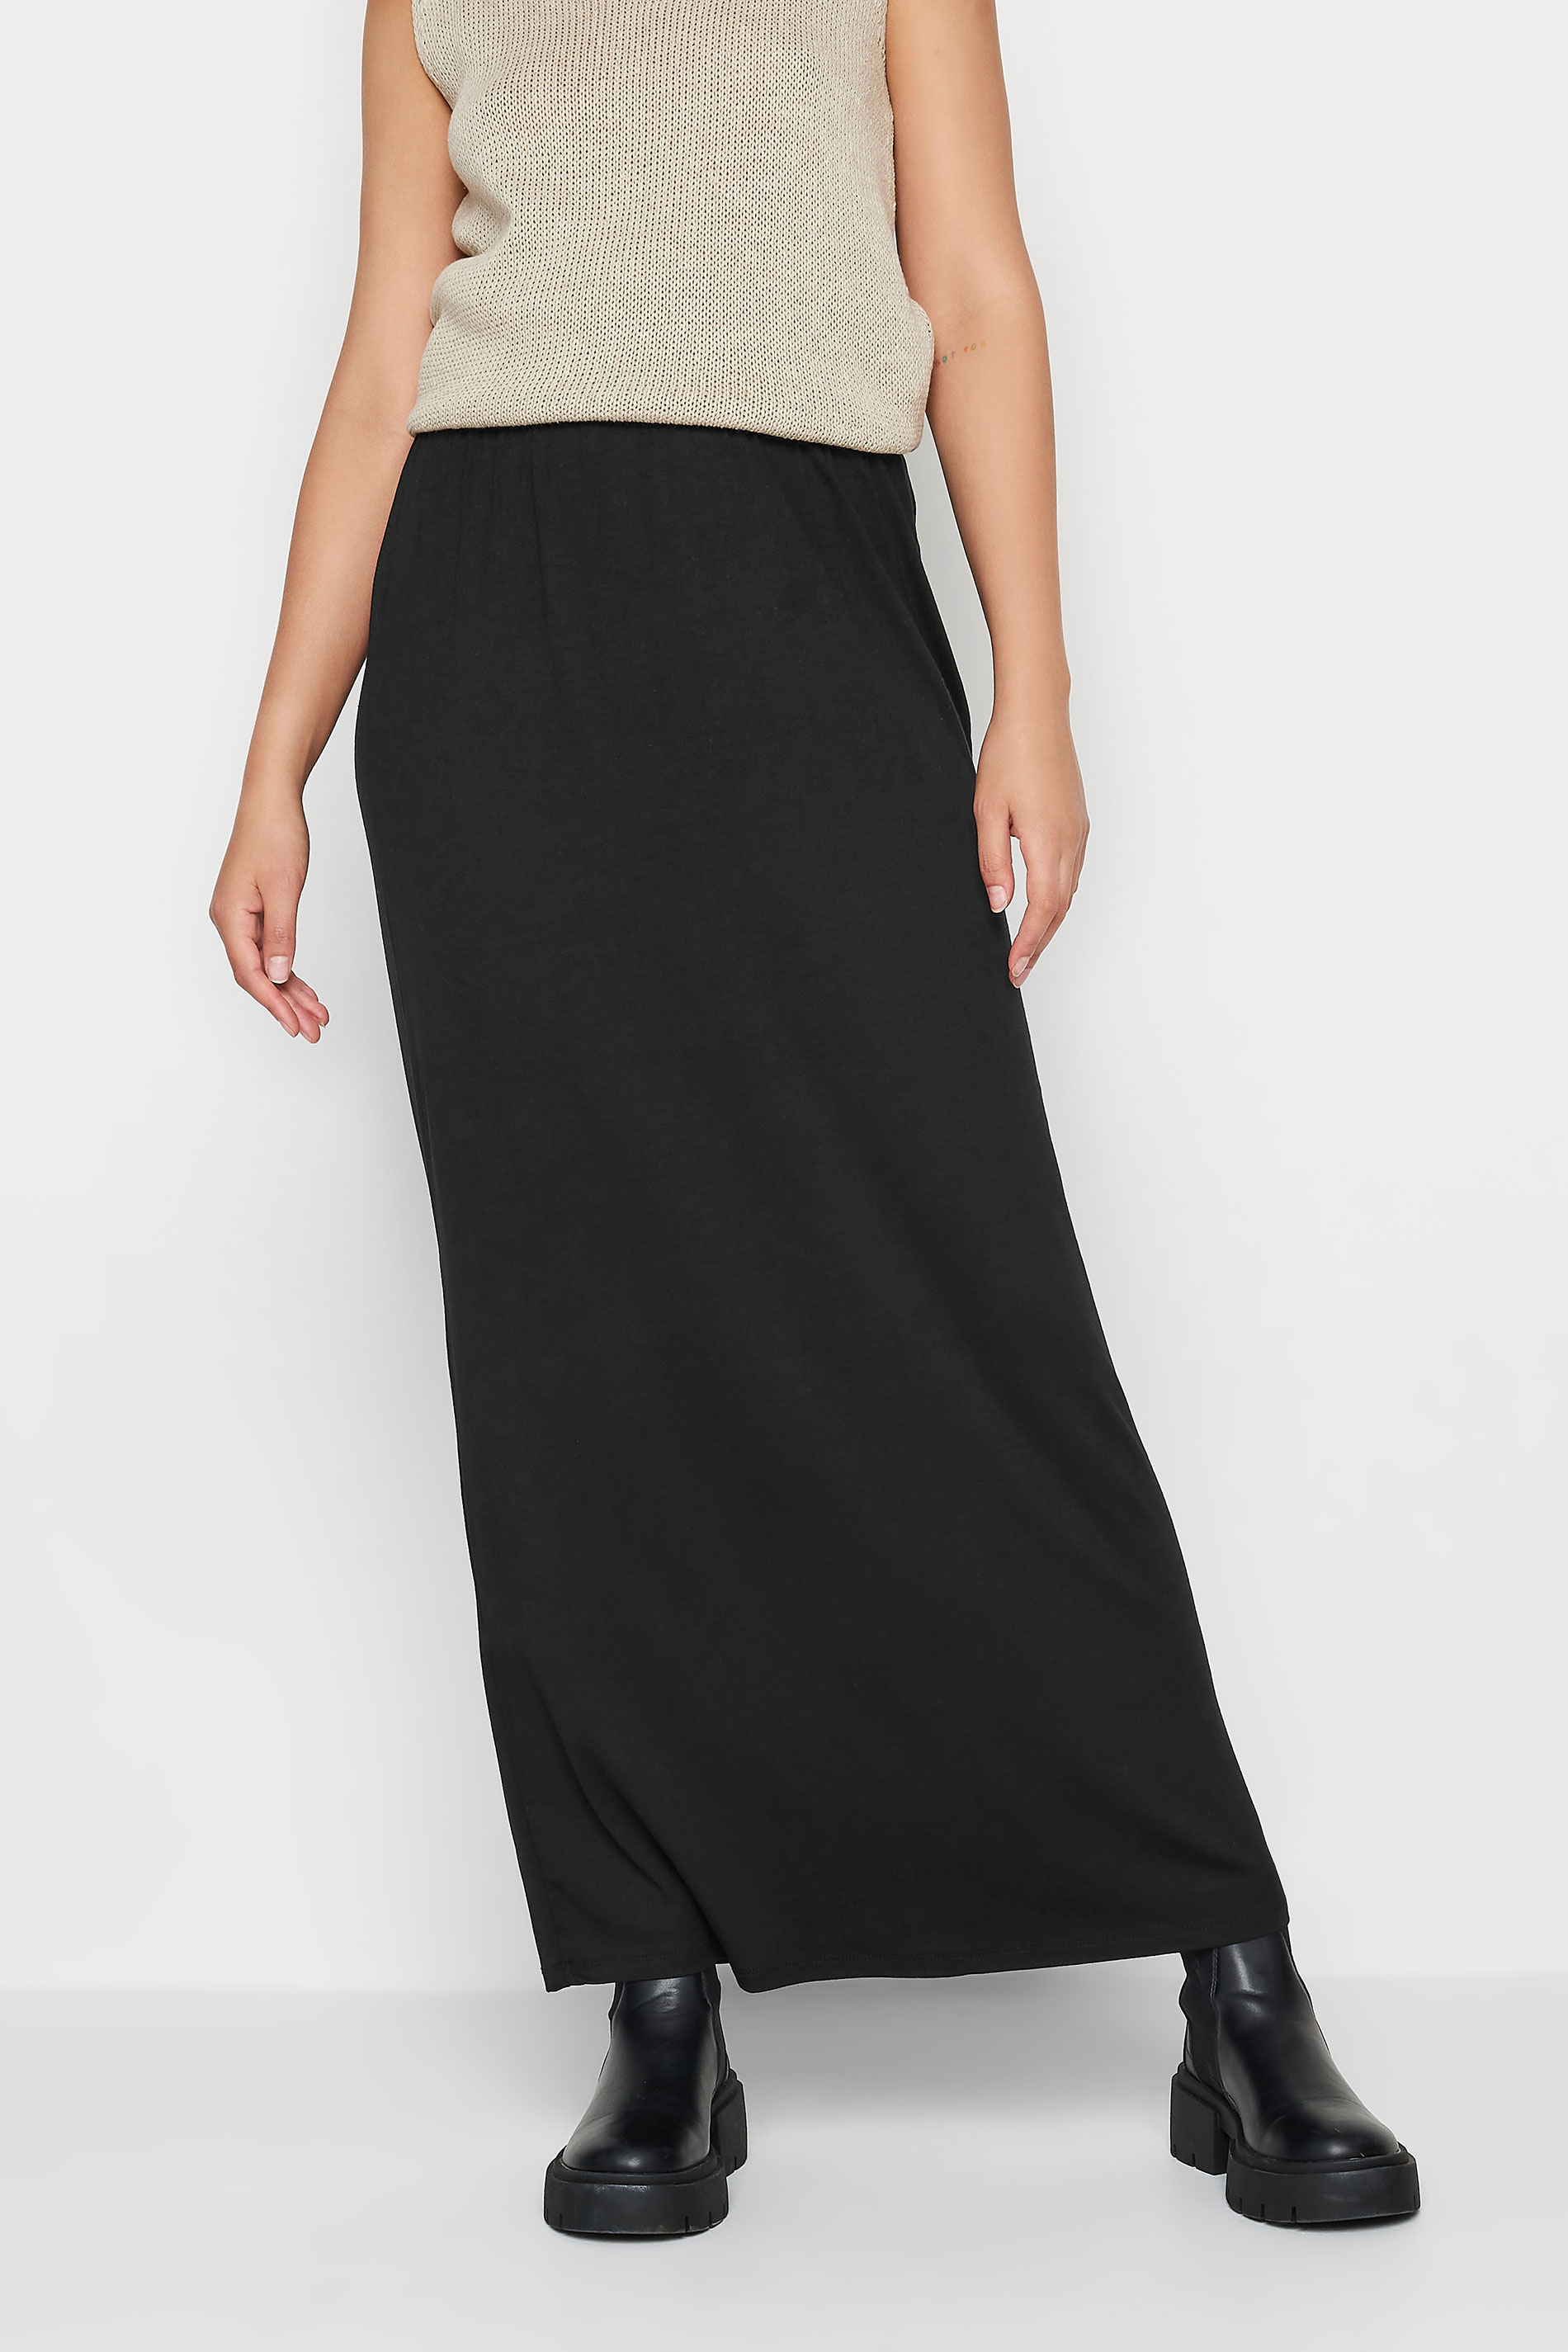 LTS Tall Women's Black Maxi Tube Skirt | Long Tall Sally 1